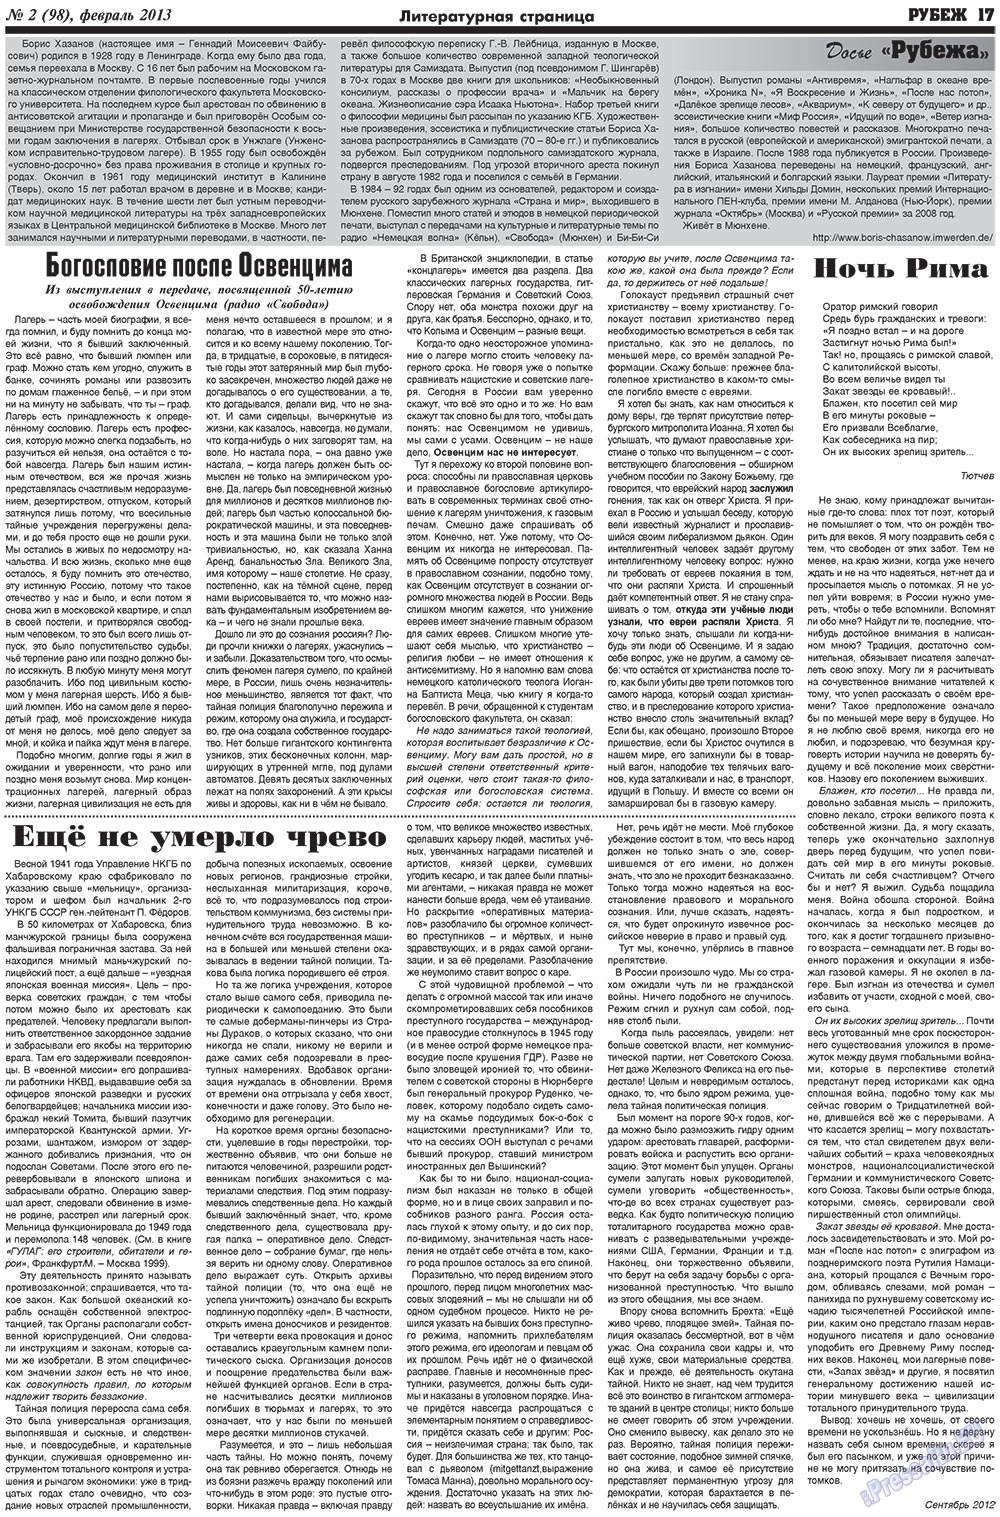 Рубеж, газета. 2013 №2 стр.17